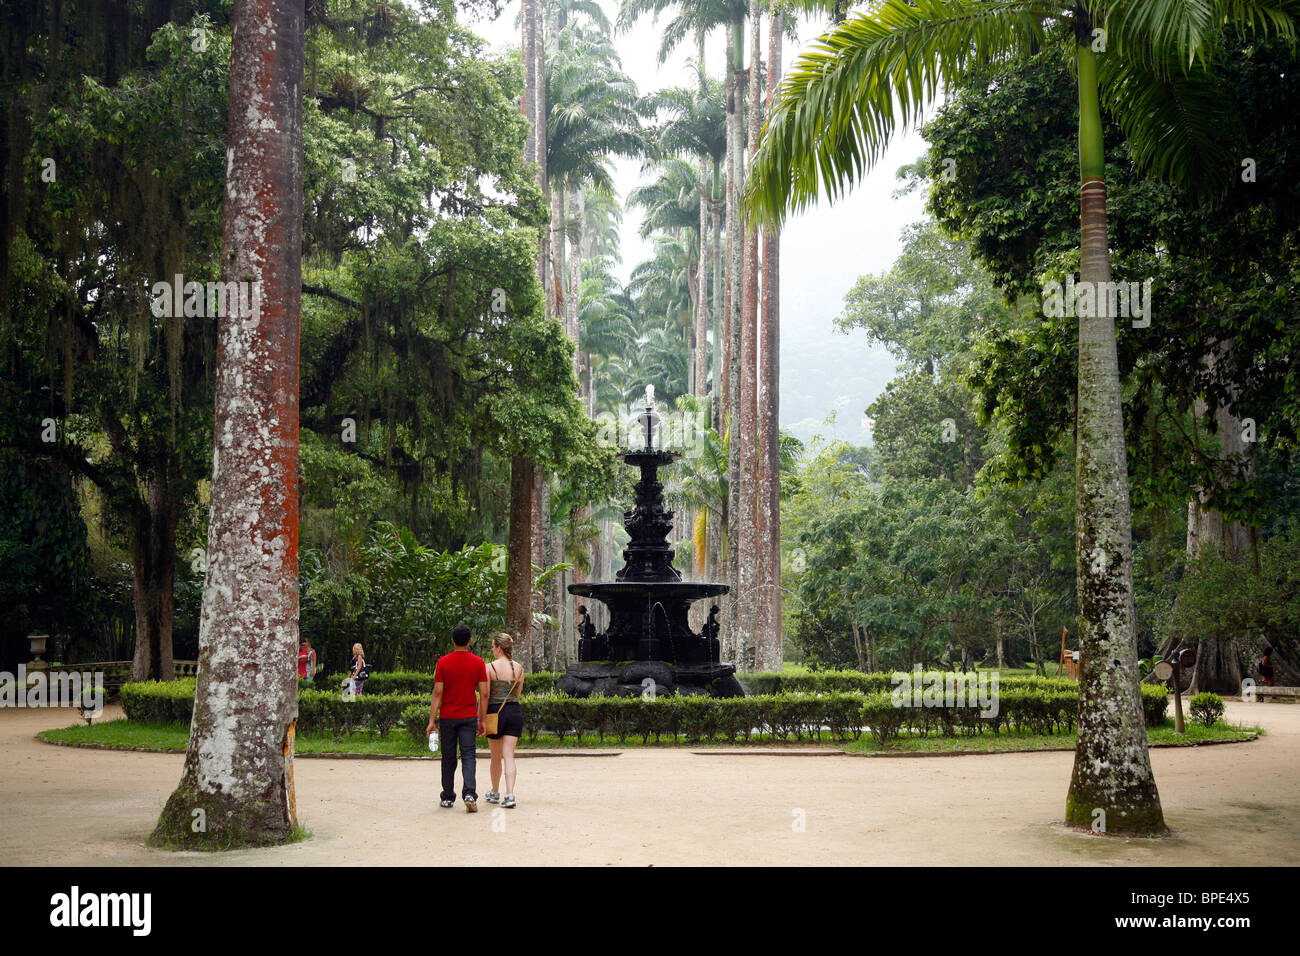 Jardim Botanico or the Botanical Gardens, Rio de Janeiro, Brazil. Stock Photo